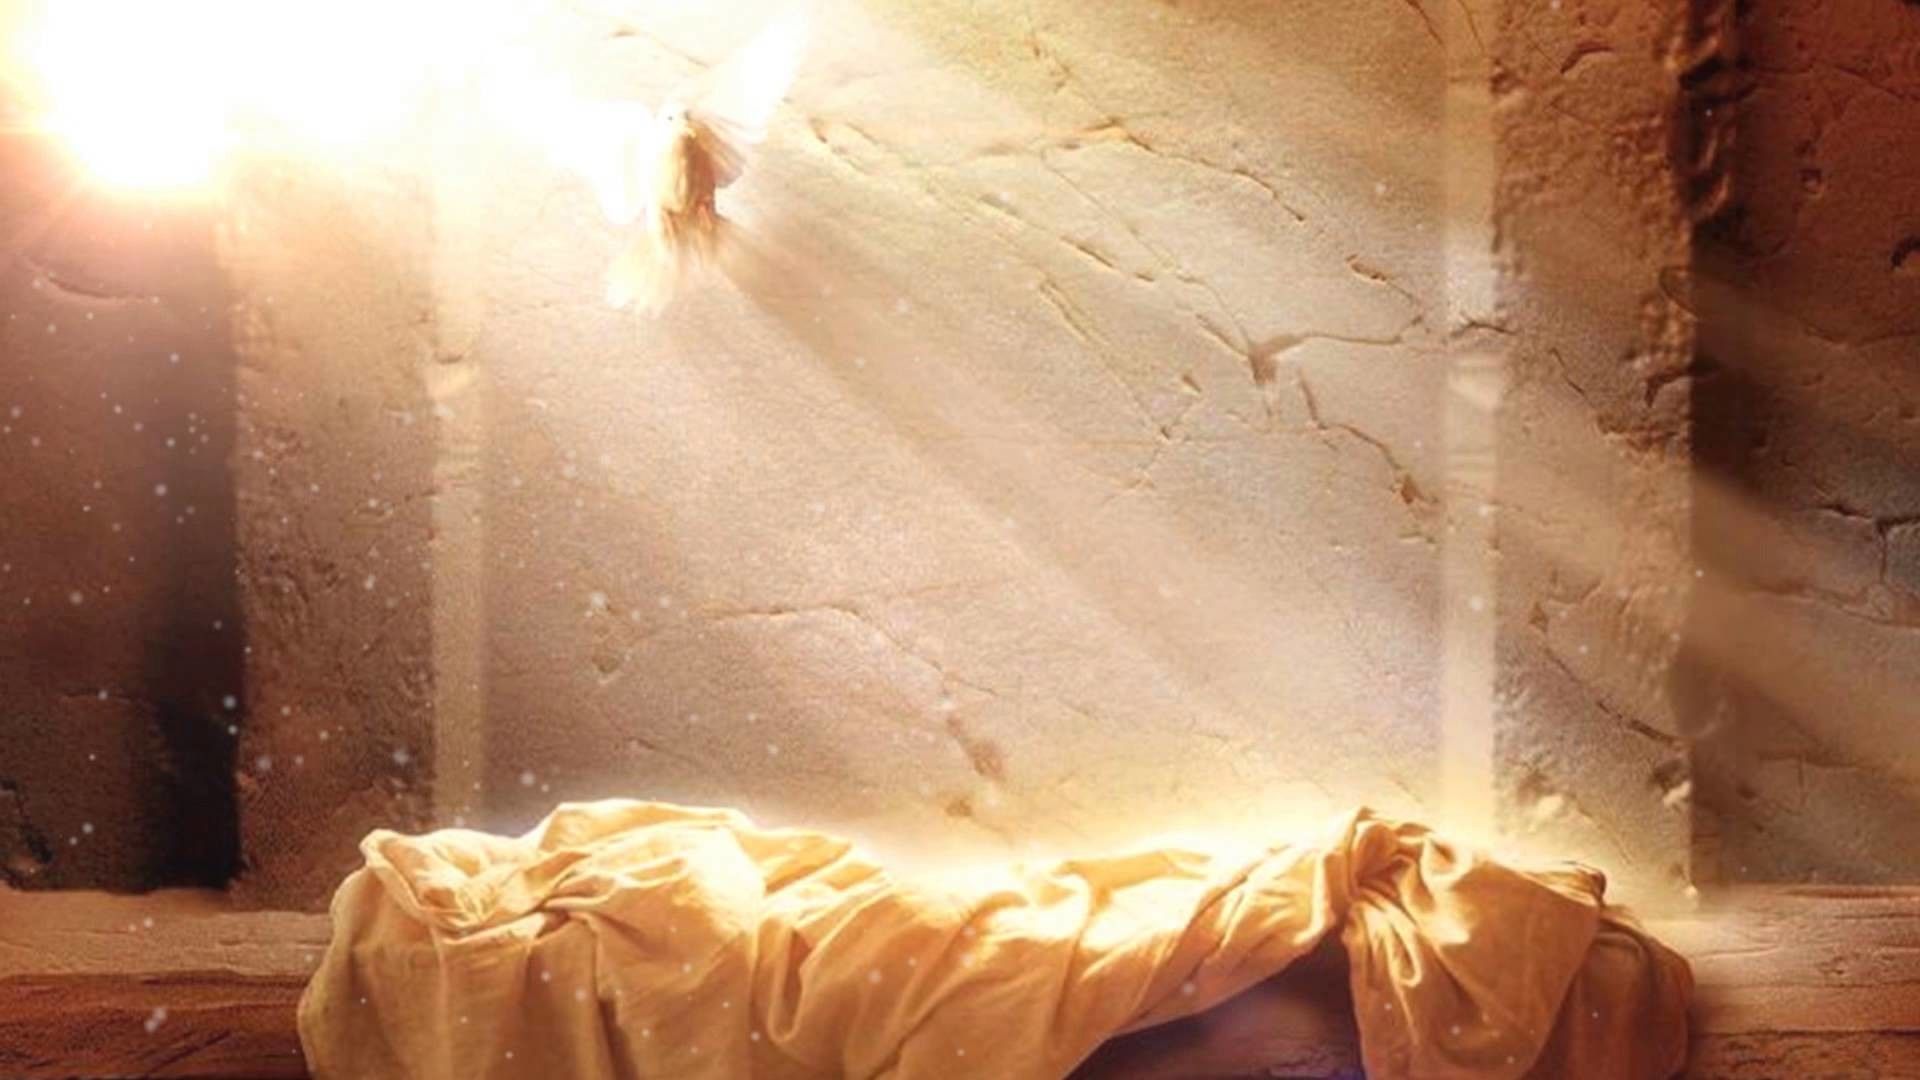 Jesus Risen Images Wallpapers